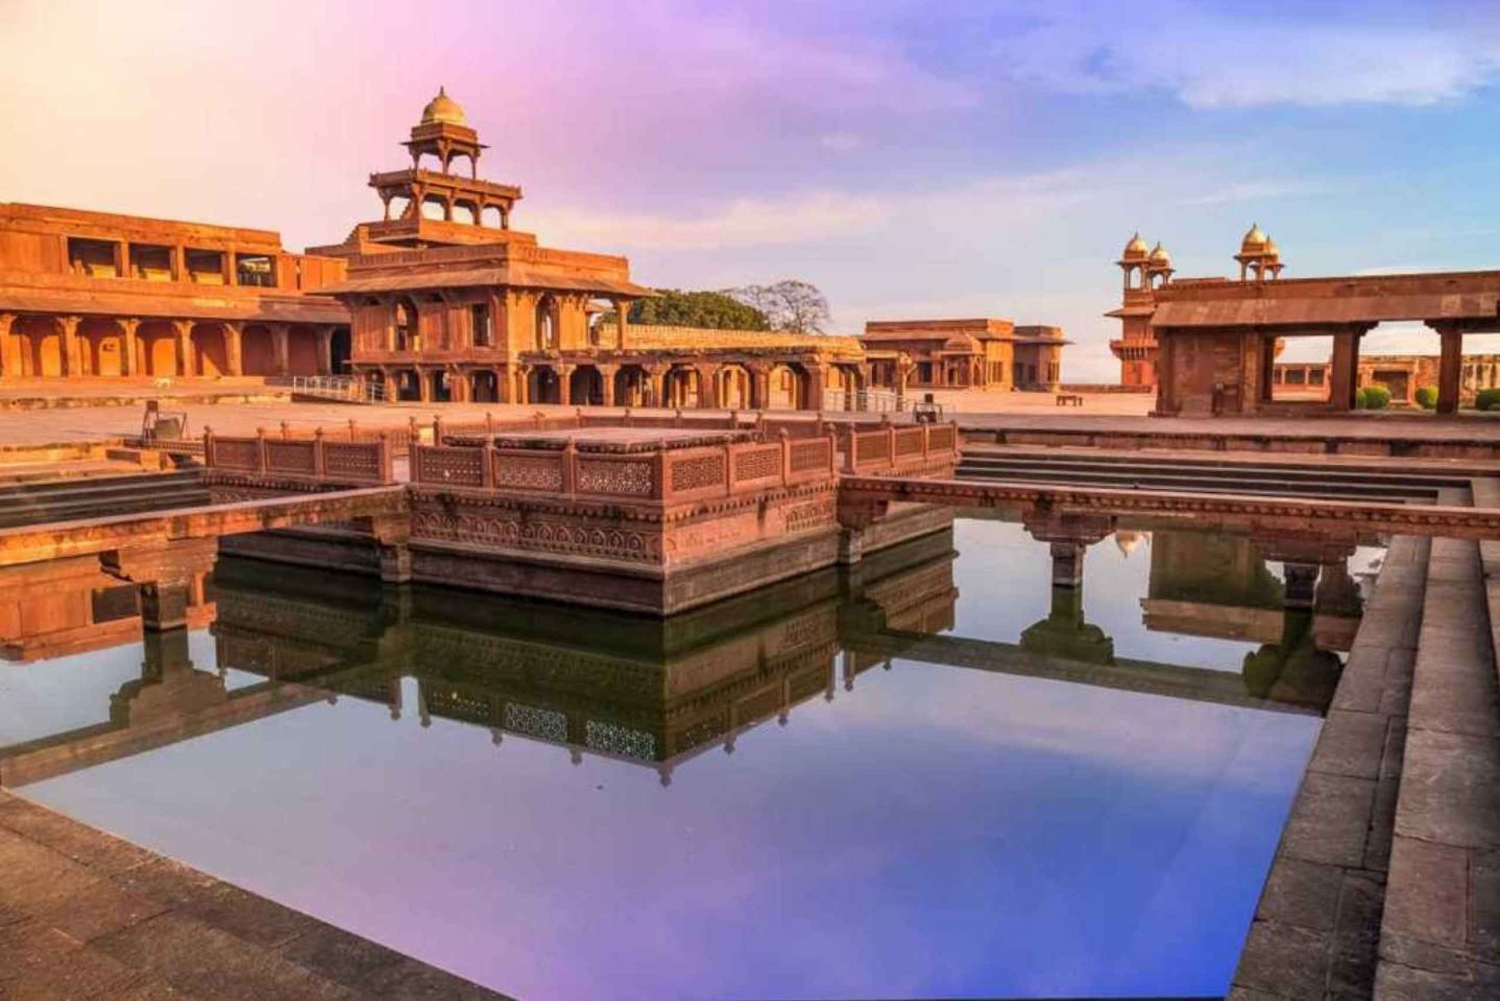 Jaipur : Transfert vers Agra via Chand Baori et Fatehpur Sikri